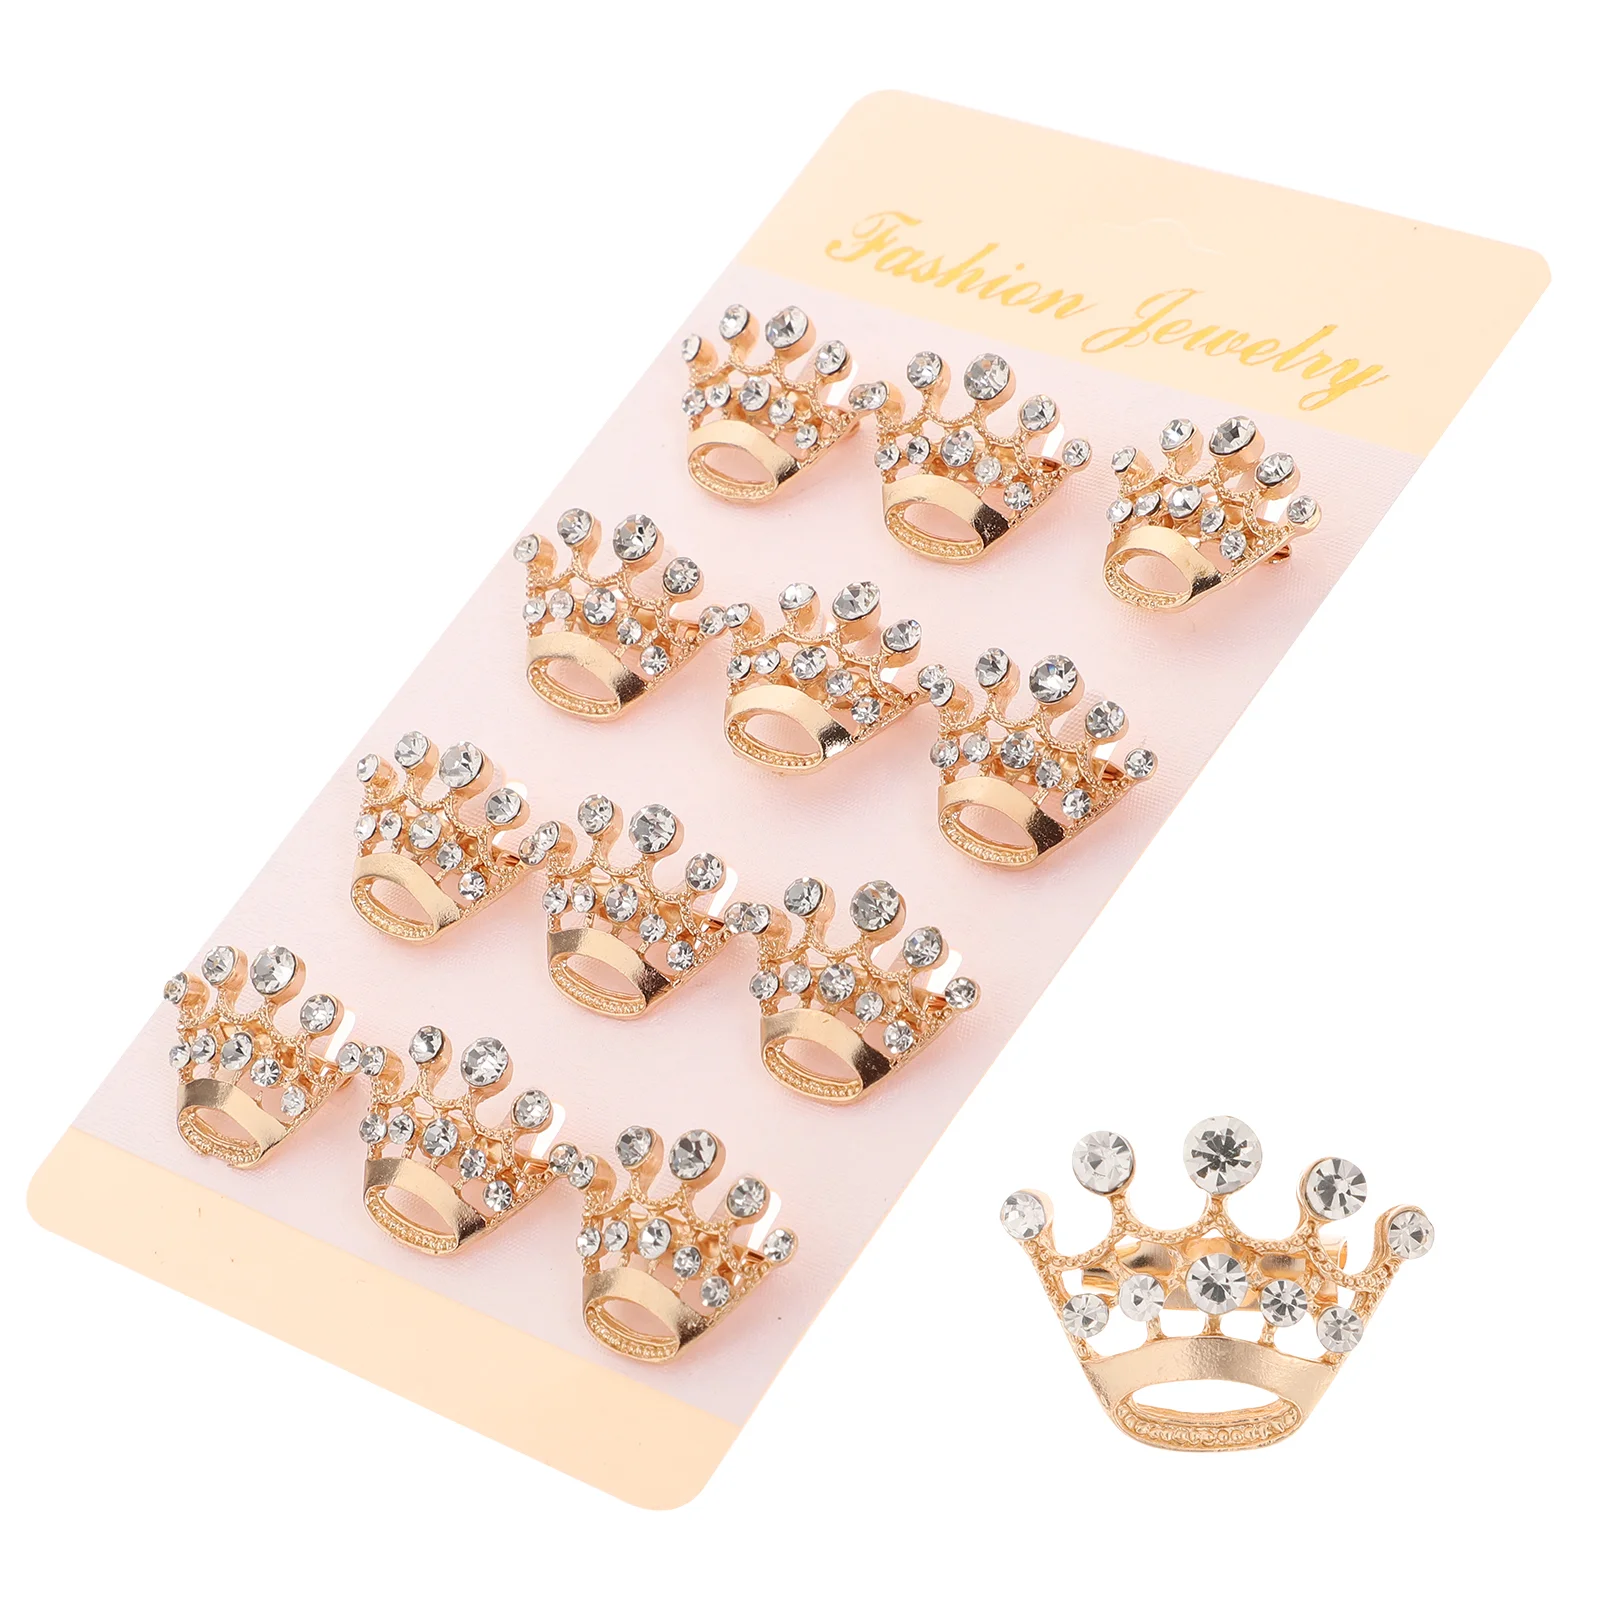 

12pcs Fashion Diamante Wedding Party Pageant Tiara Crown Corsage Brooch Pin (Gold)